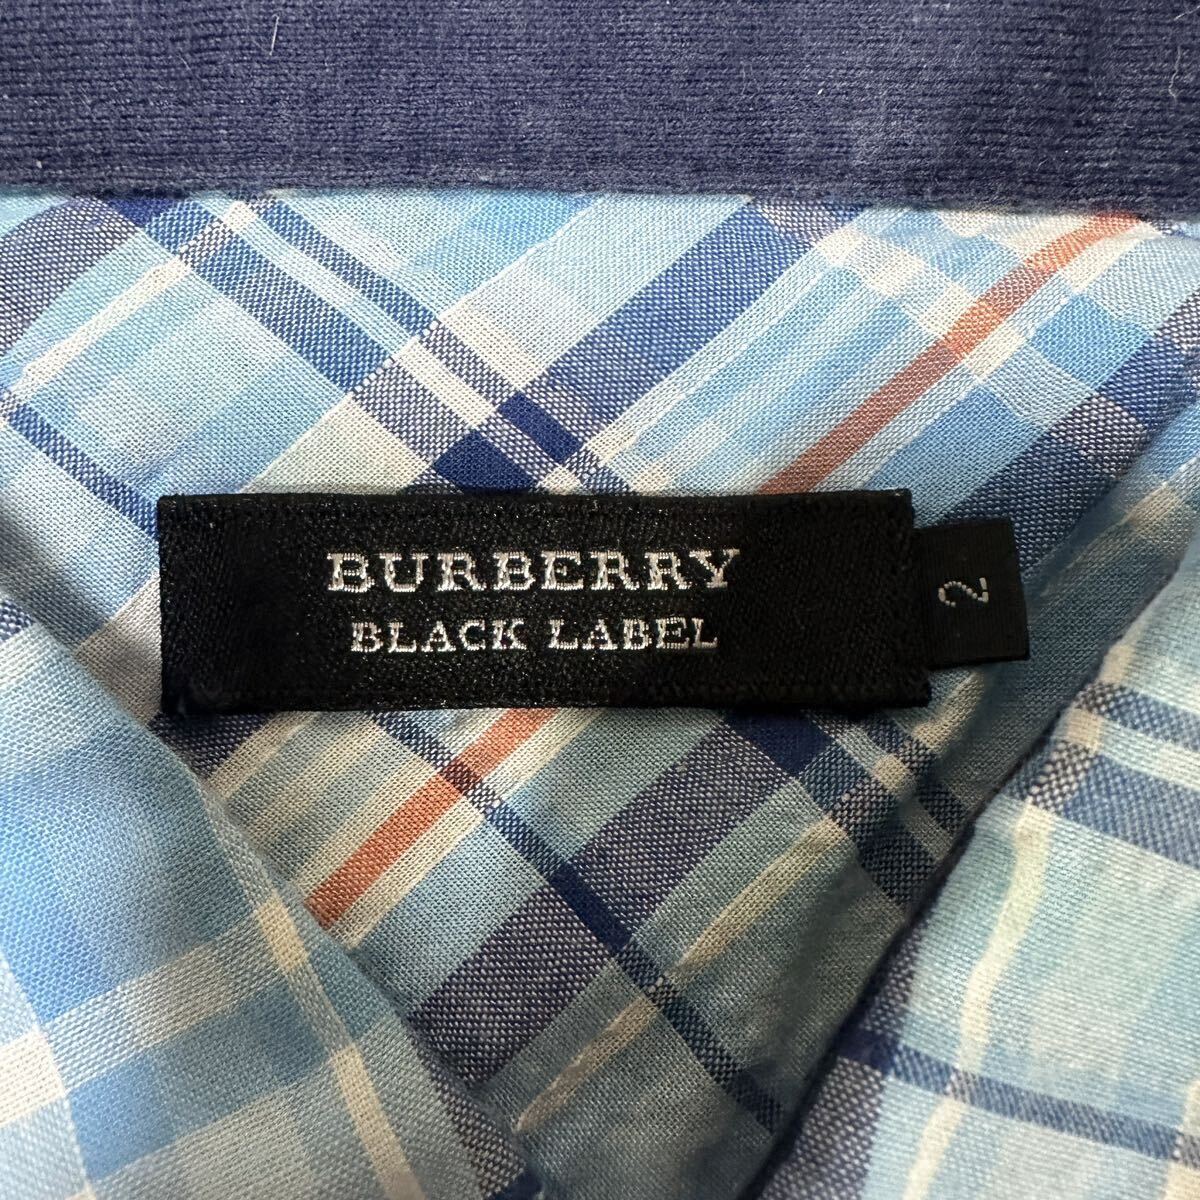 BURBERRY BLACK LABEL Burberry Black Label рубашка с коротким рукавом проверка шланг Logo весна лето материалы размер 3